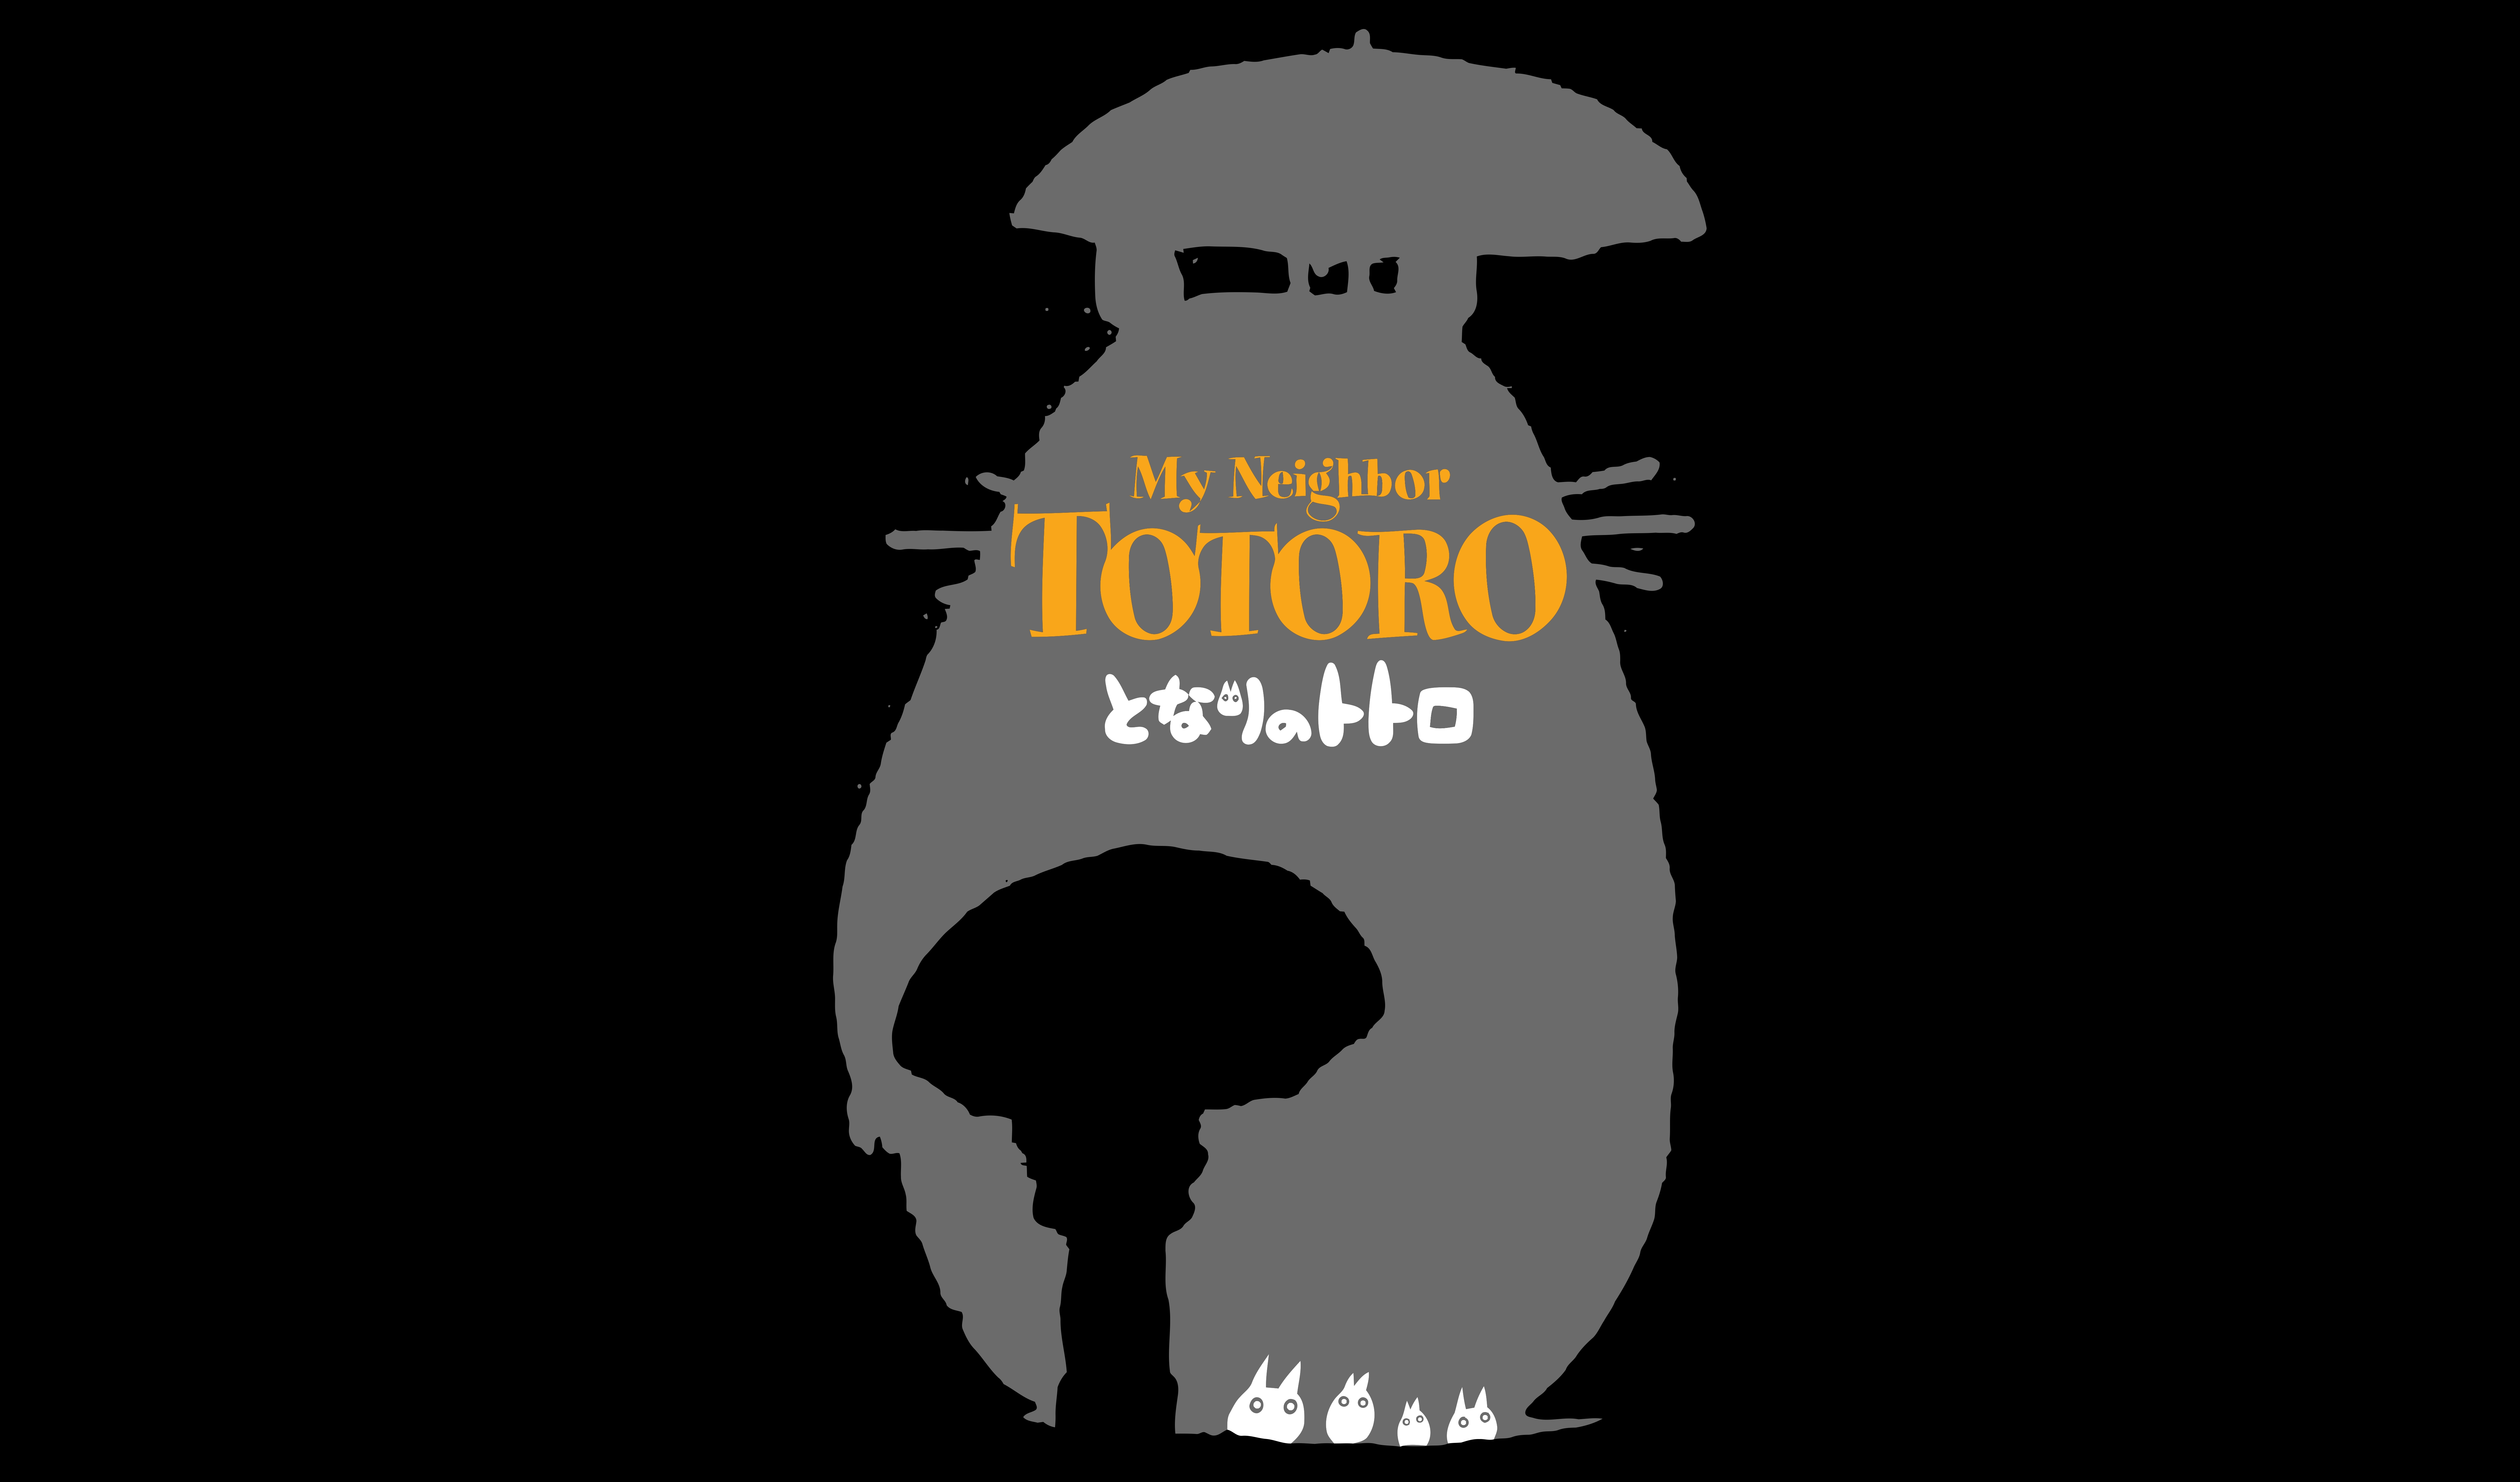 HD wallpaper, Black Background, 8K, My Neighbor Totoro, Studio Ghibli, 5K